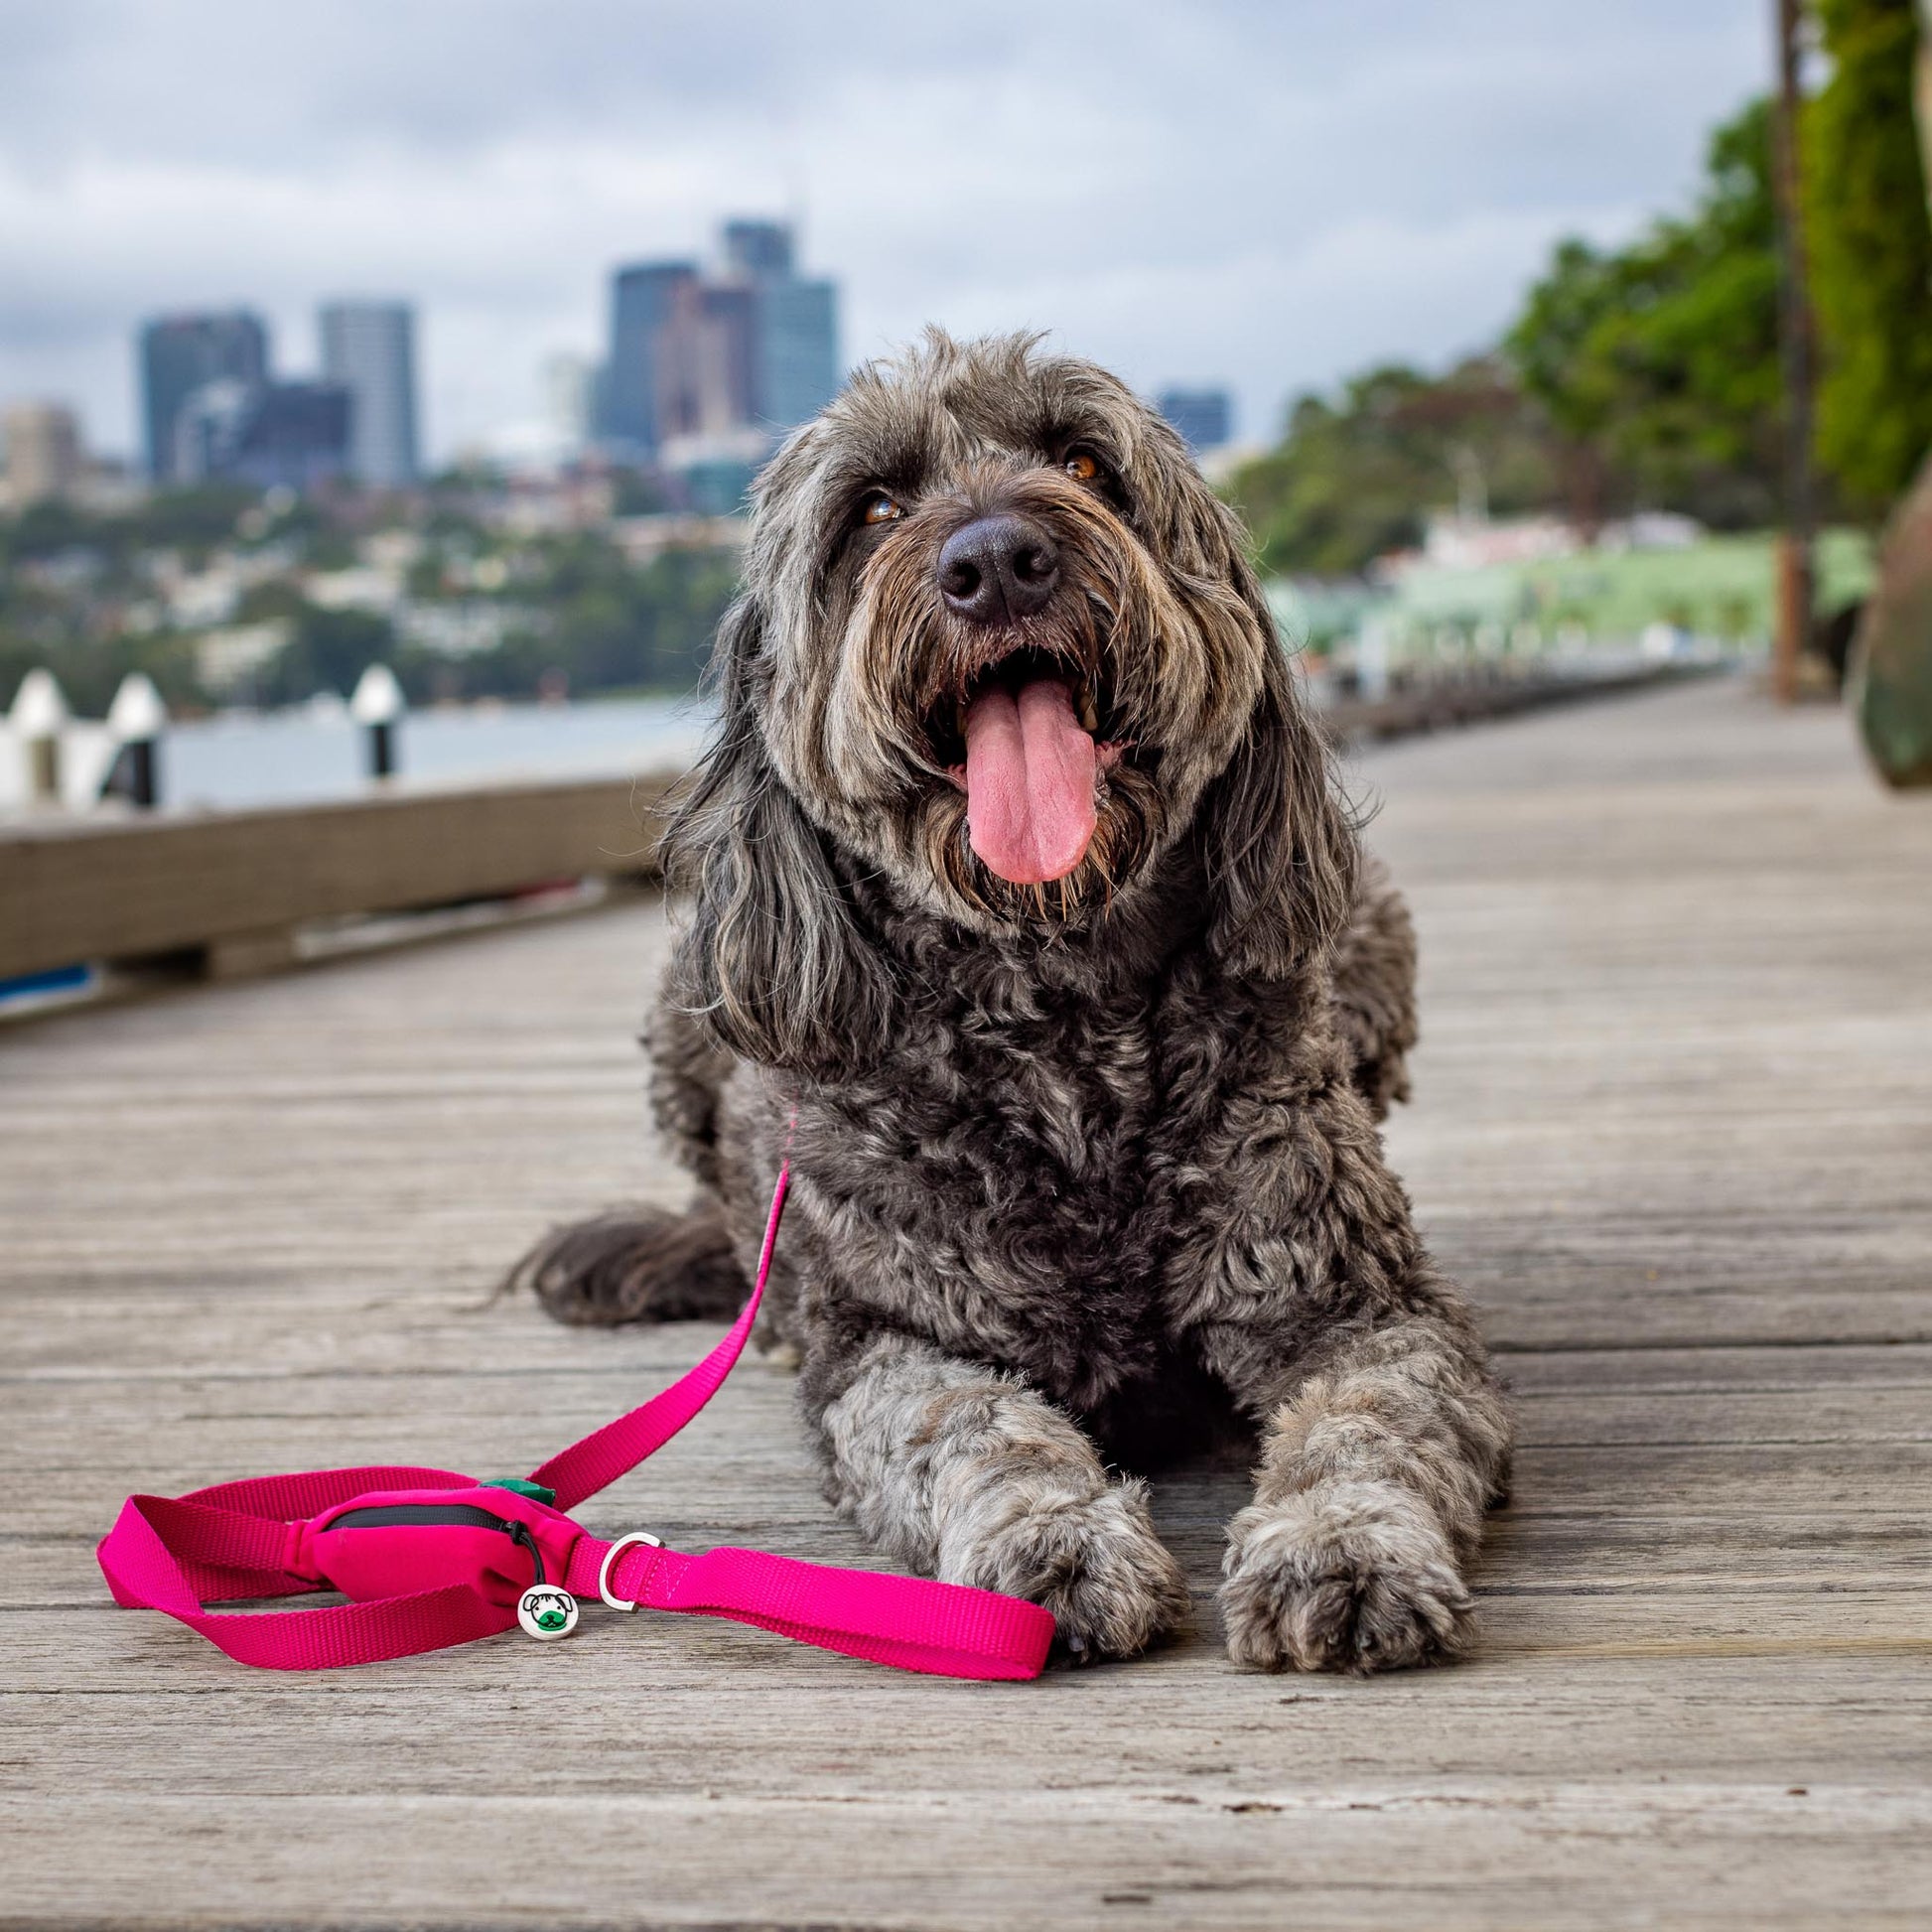 Groodle wearing pink dog leash